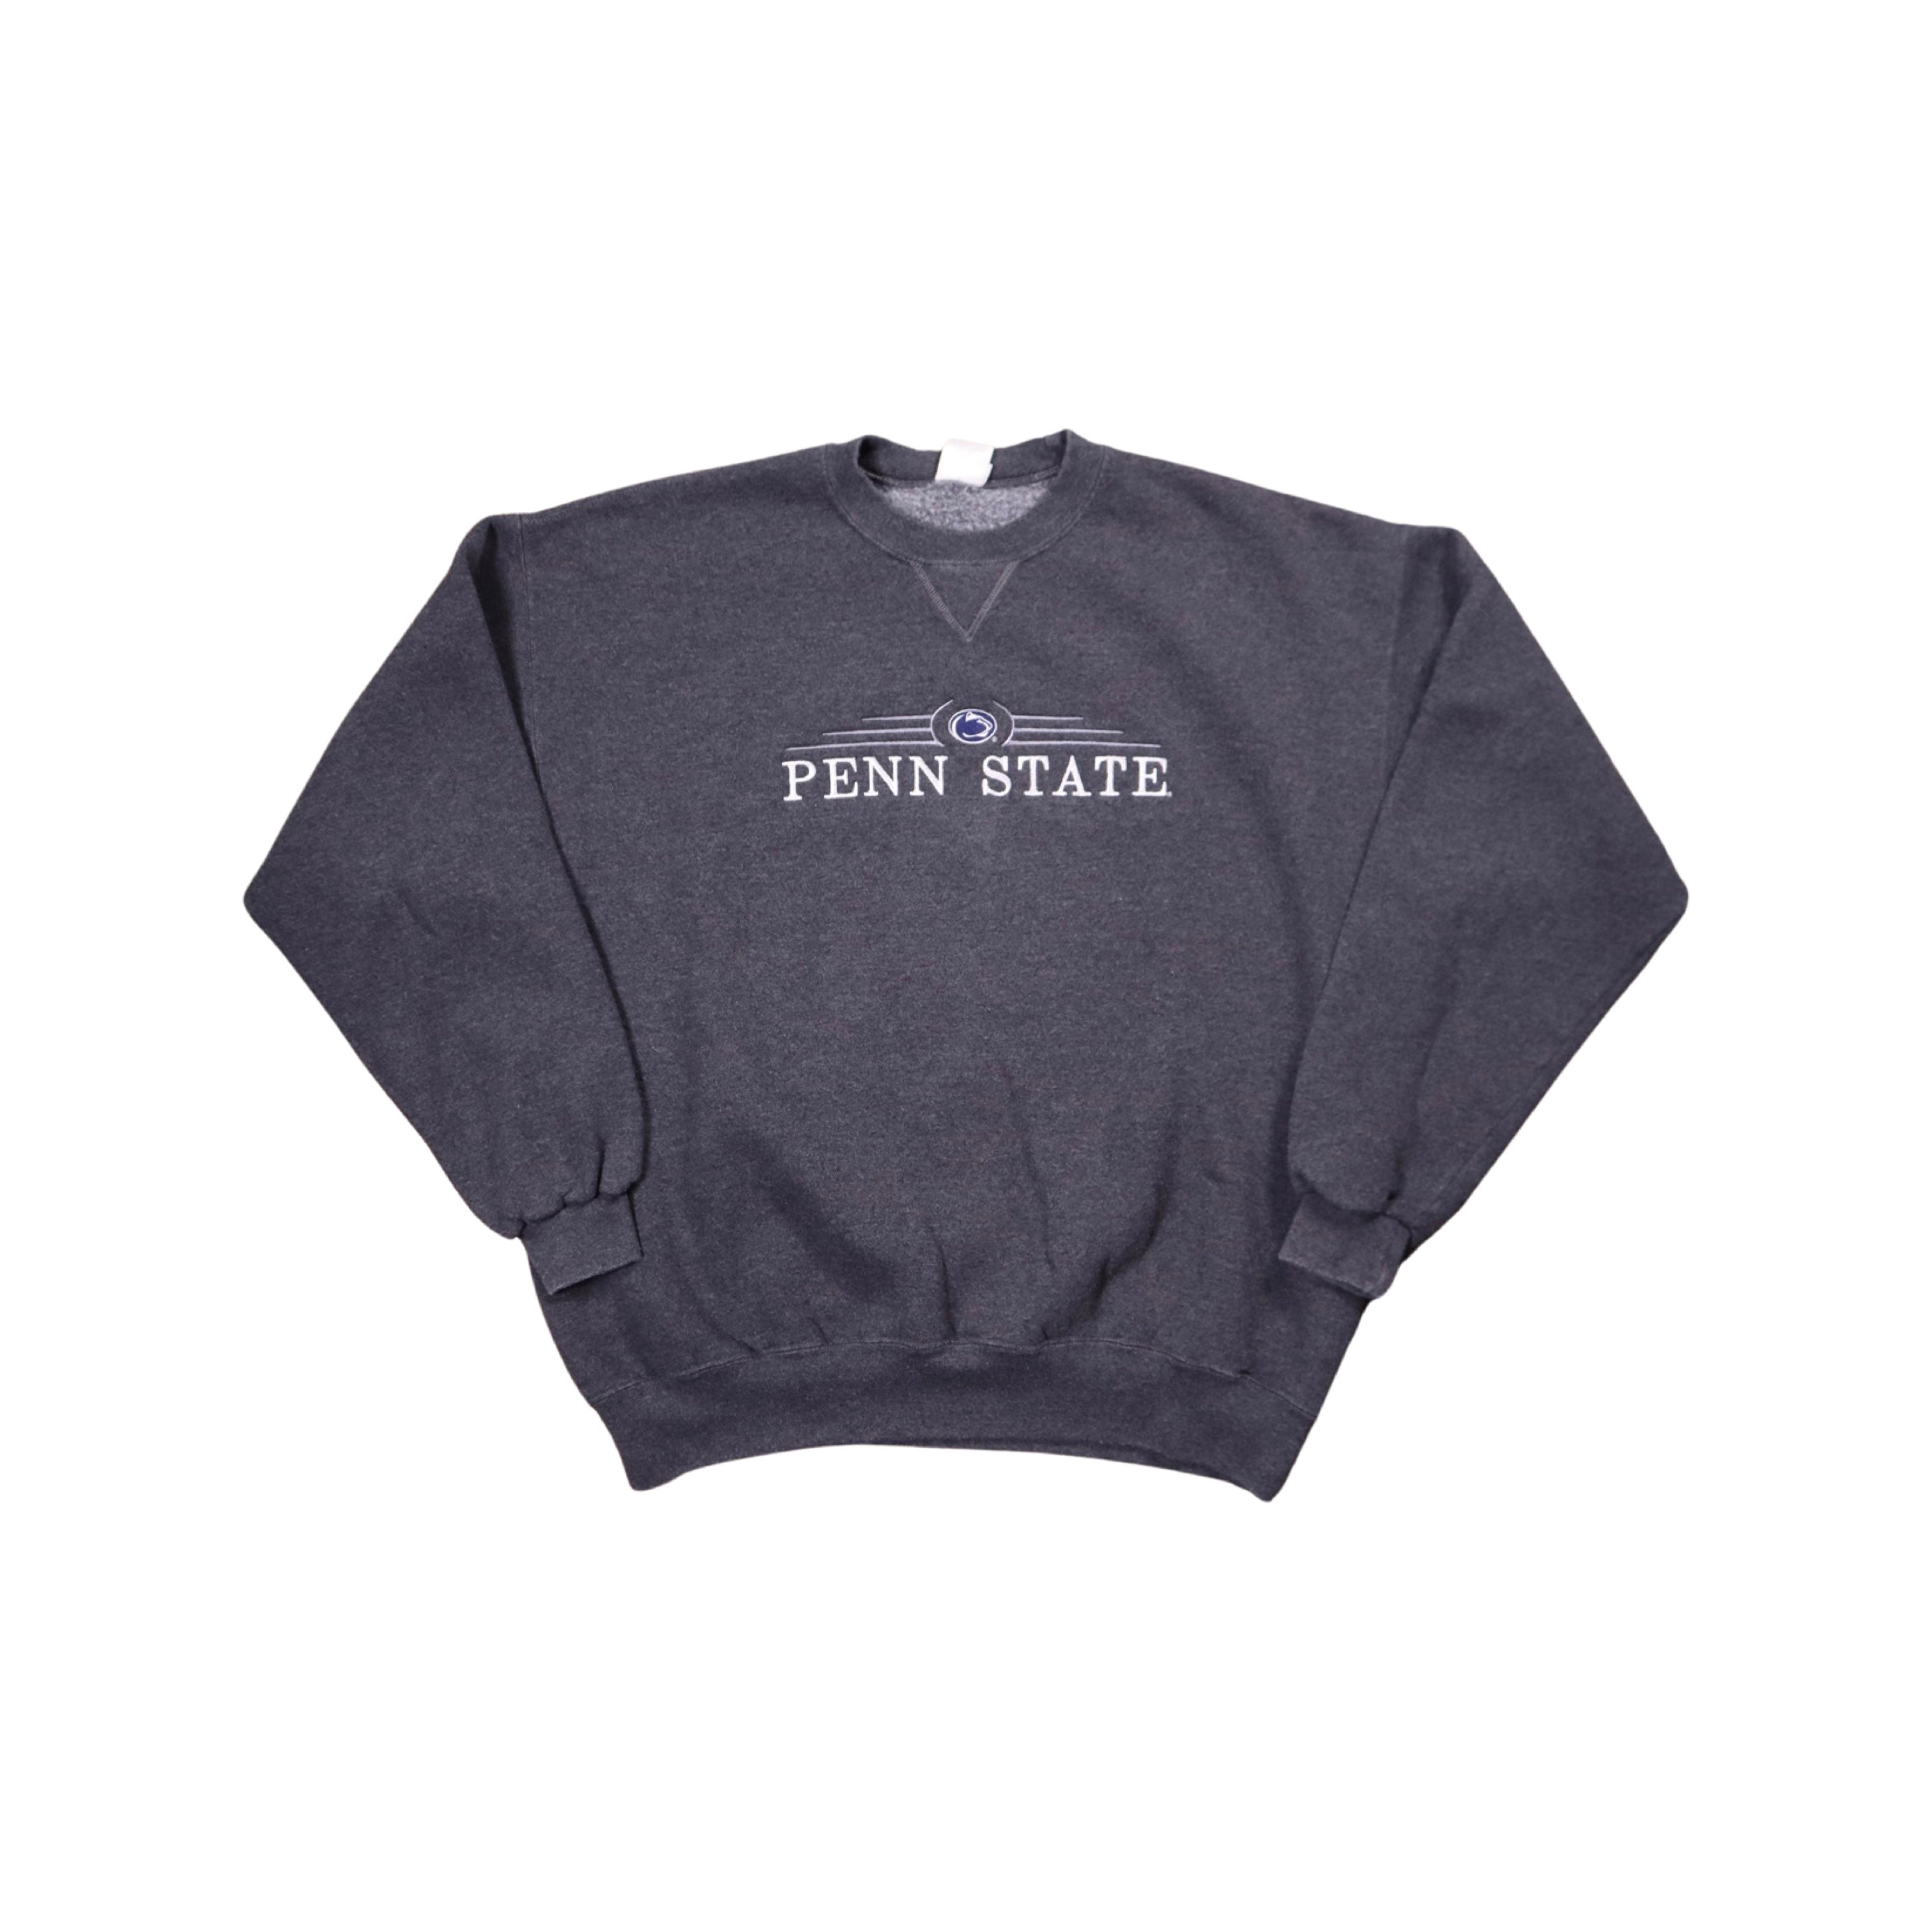 Penn State 90s Sweater (XL)